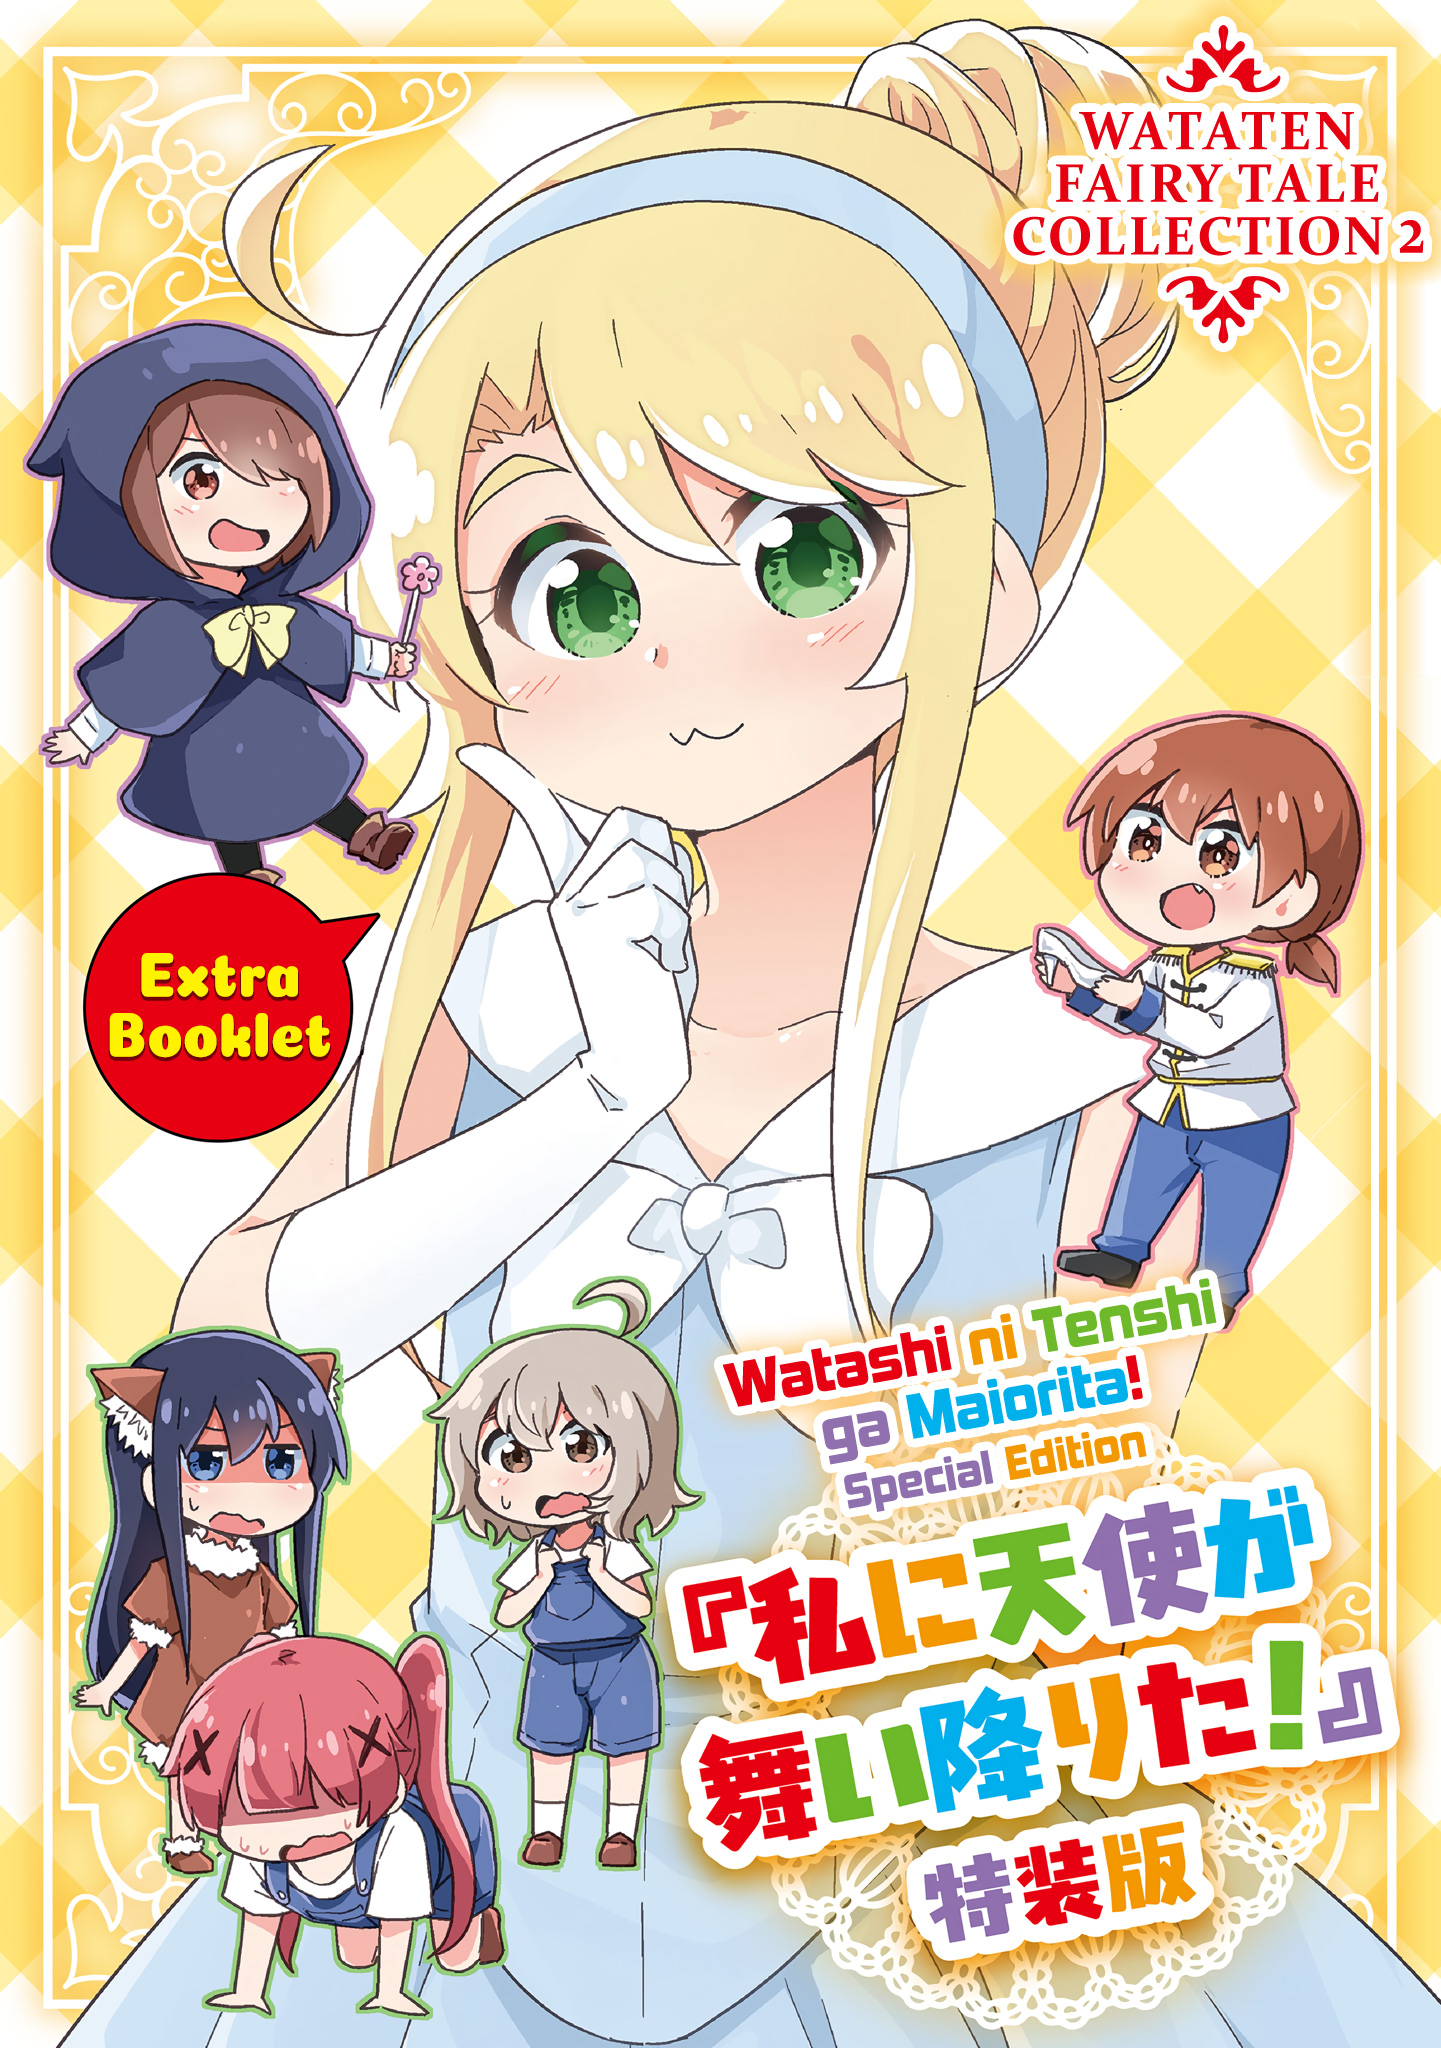 Watashi Ni Tenshi Ga Maiorita! Vol.11 Chapter 93.6: Wataten Fairy Tale Collection 2 - Picture 1